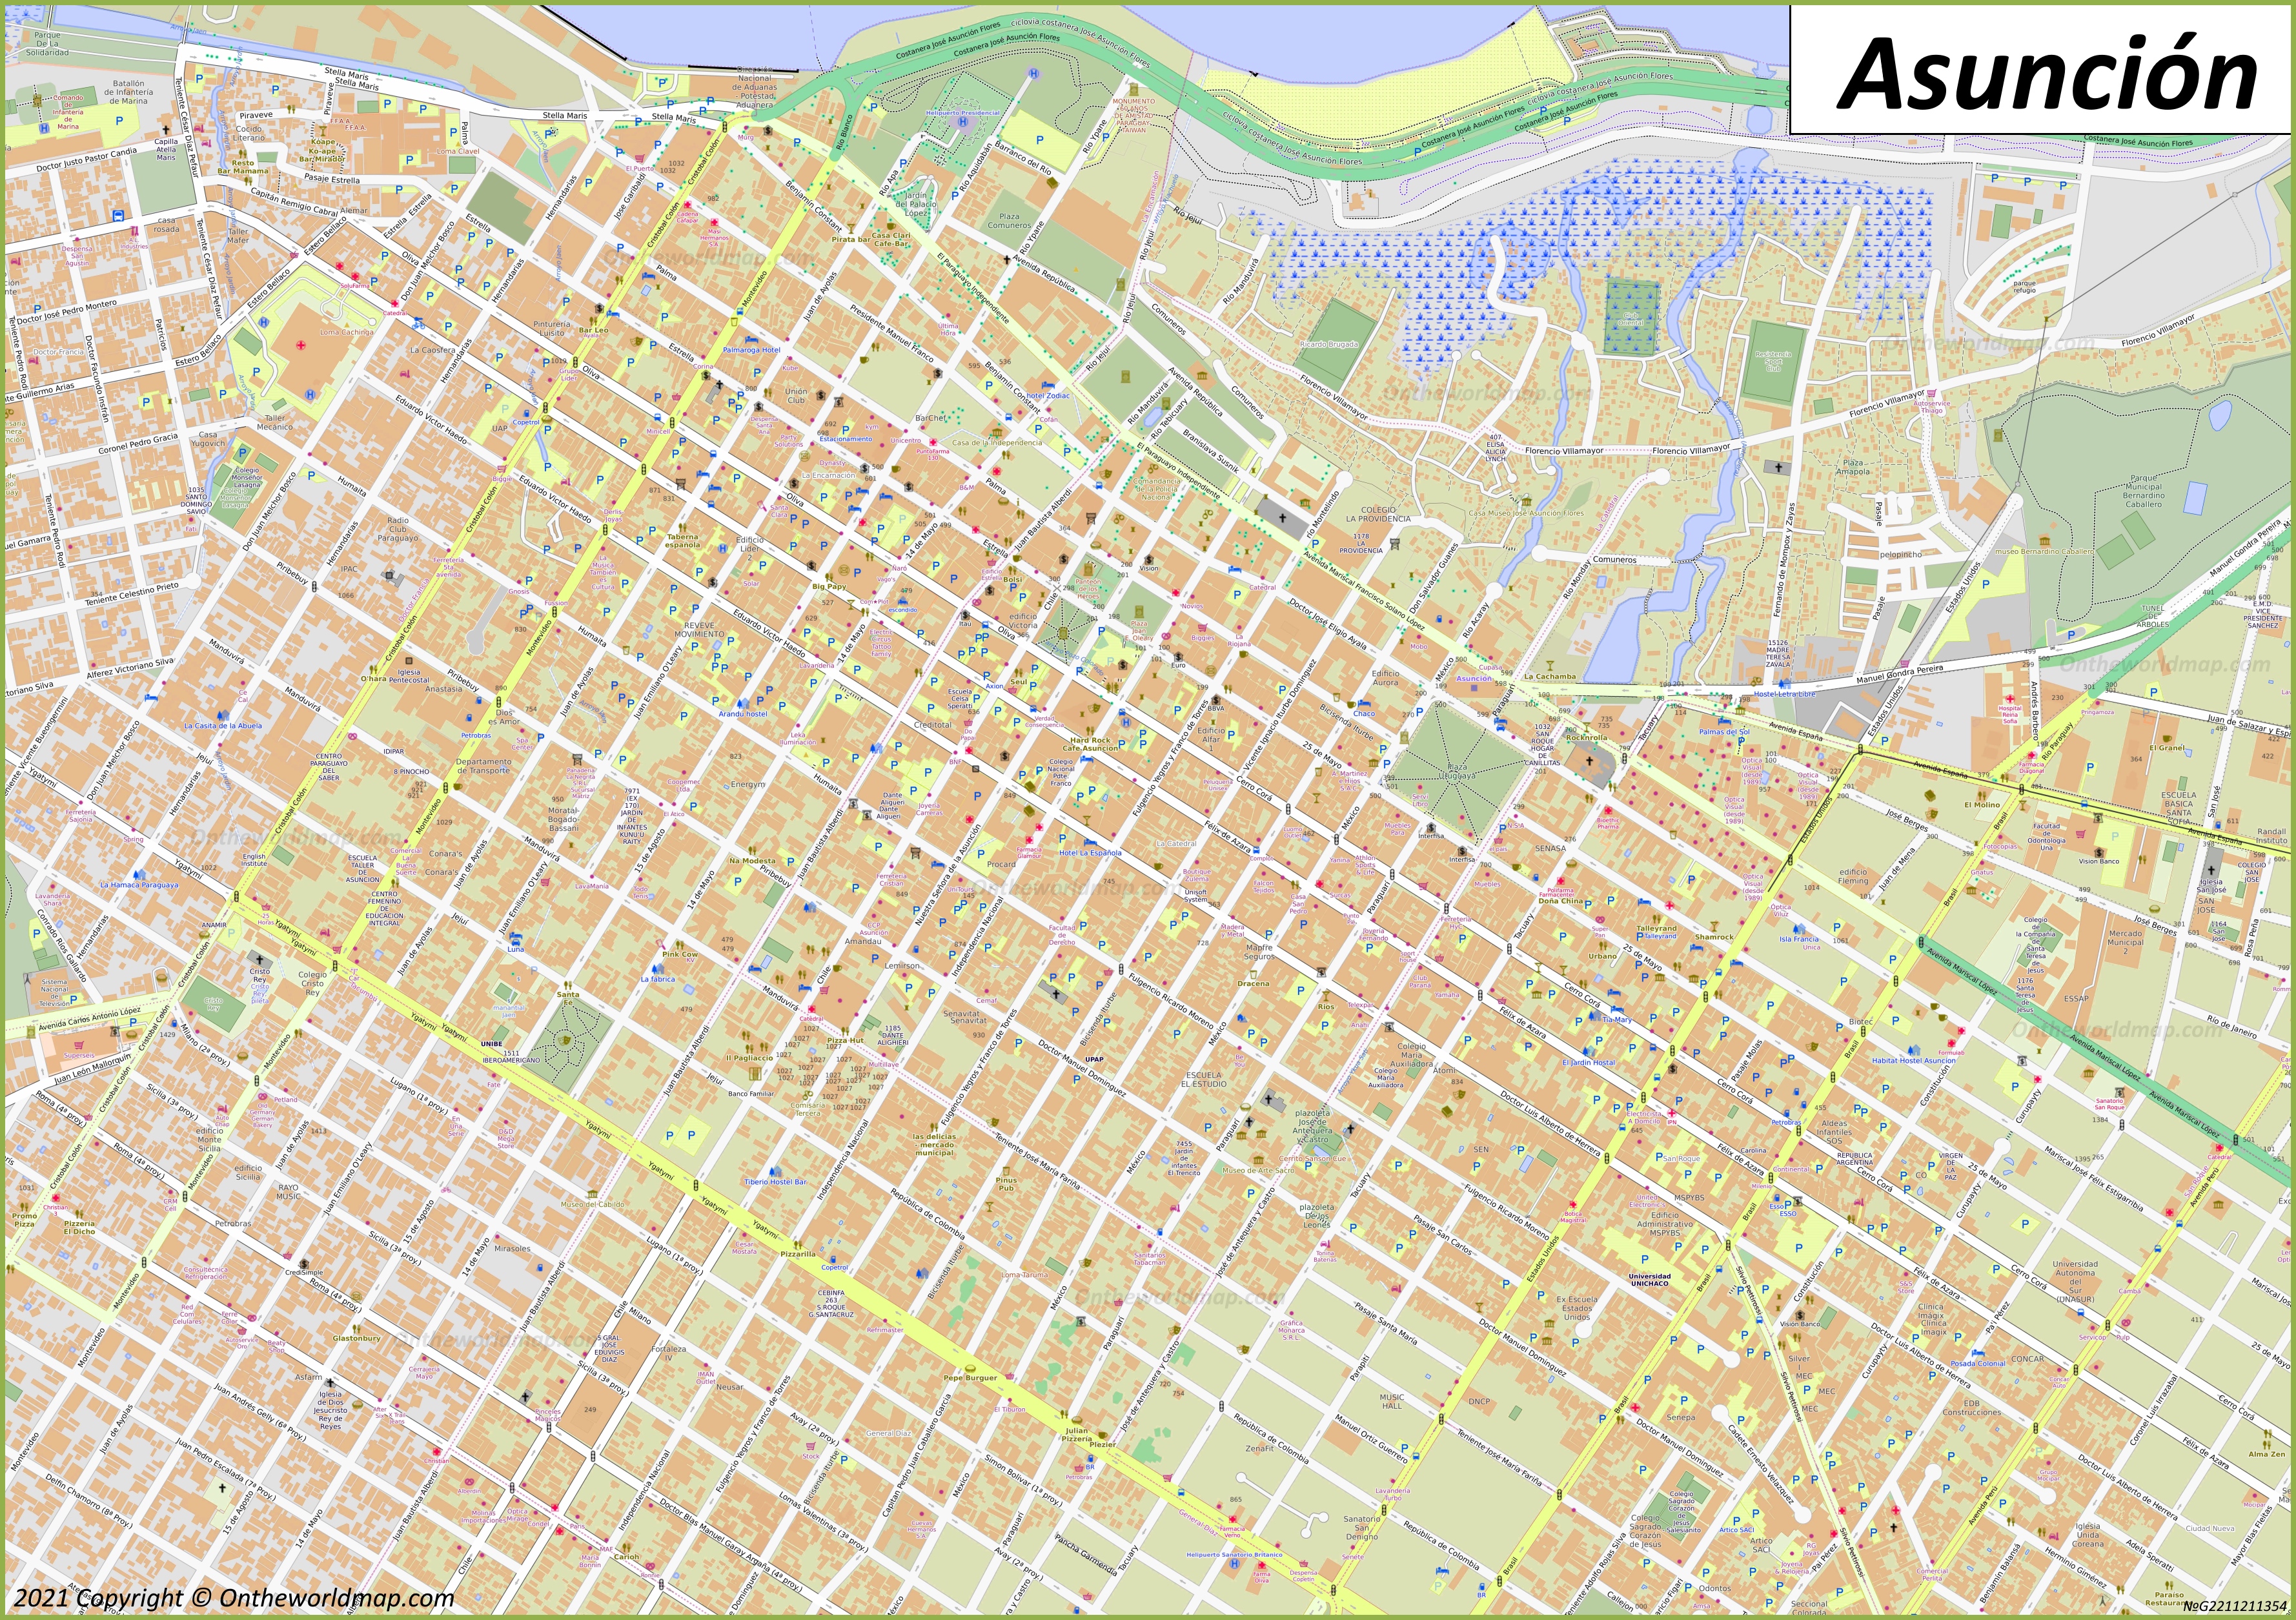 Asunción - Mapa del centro